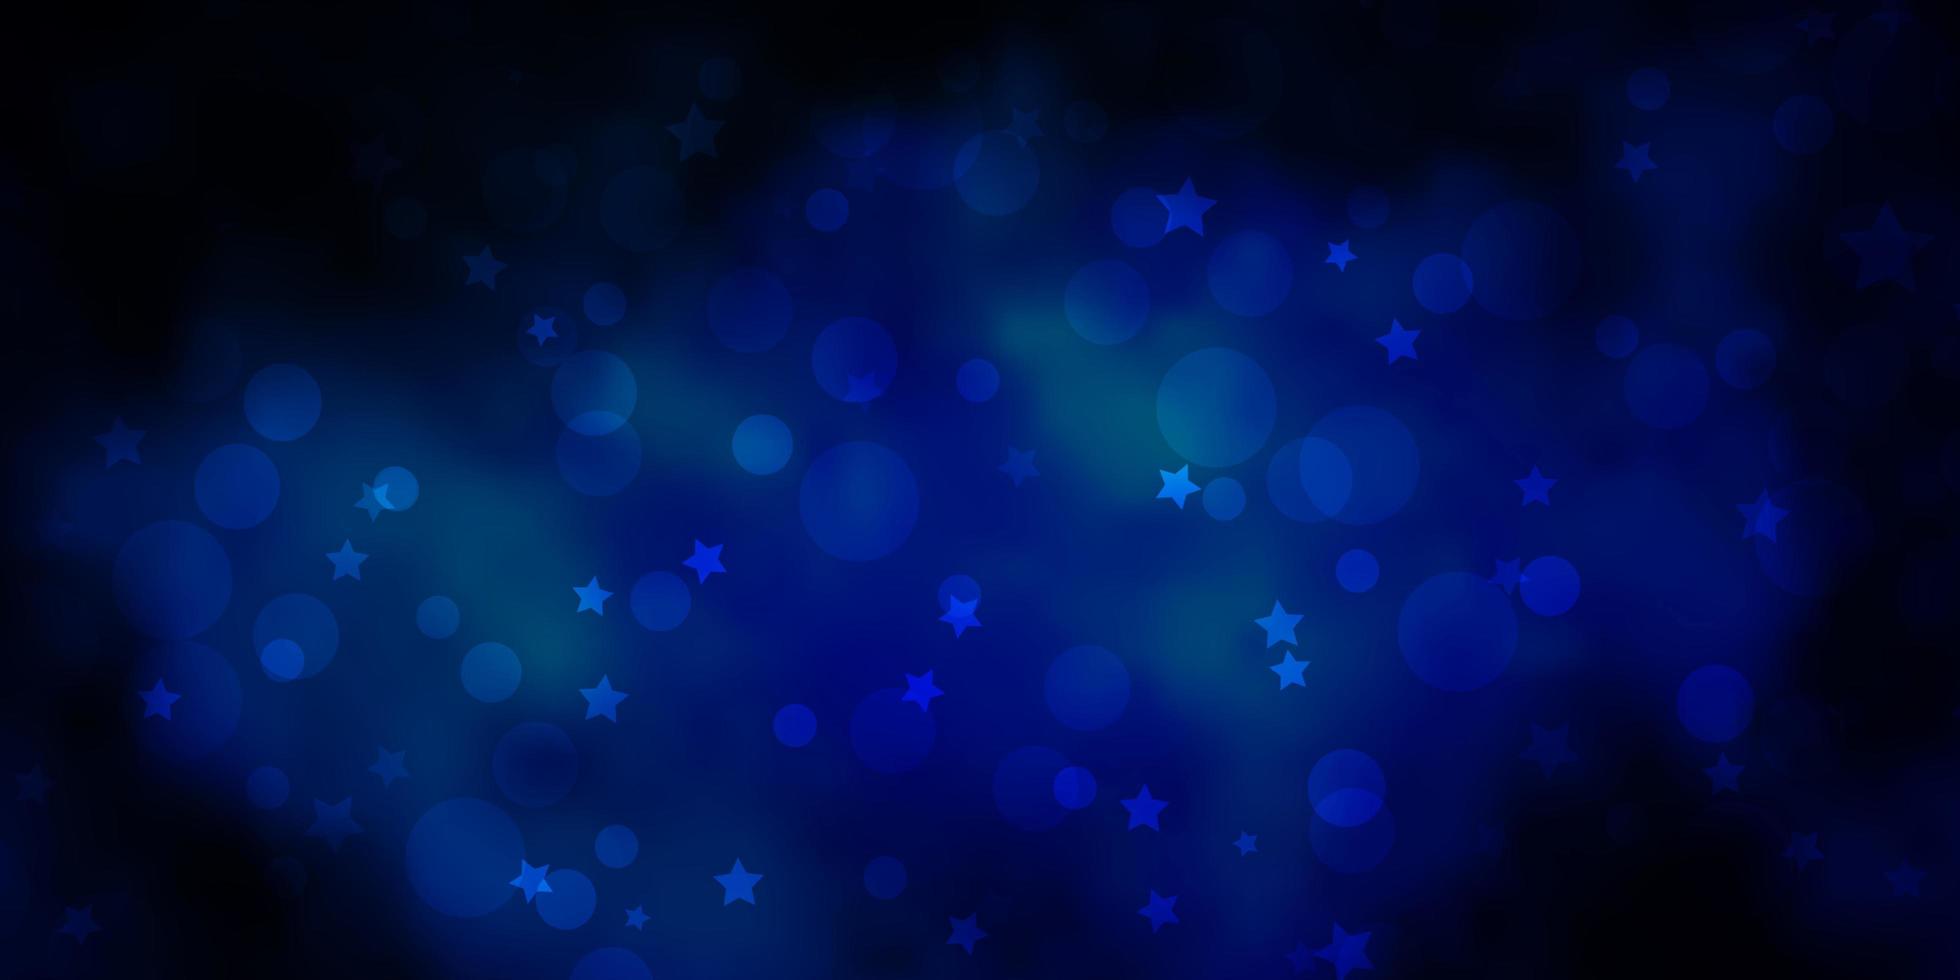 textura de vector azul oscuro con círculos, estrellas.